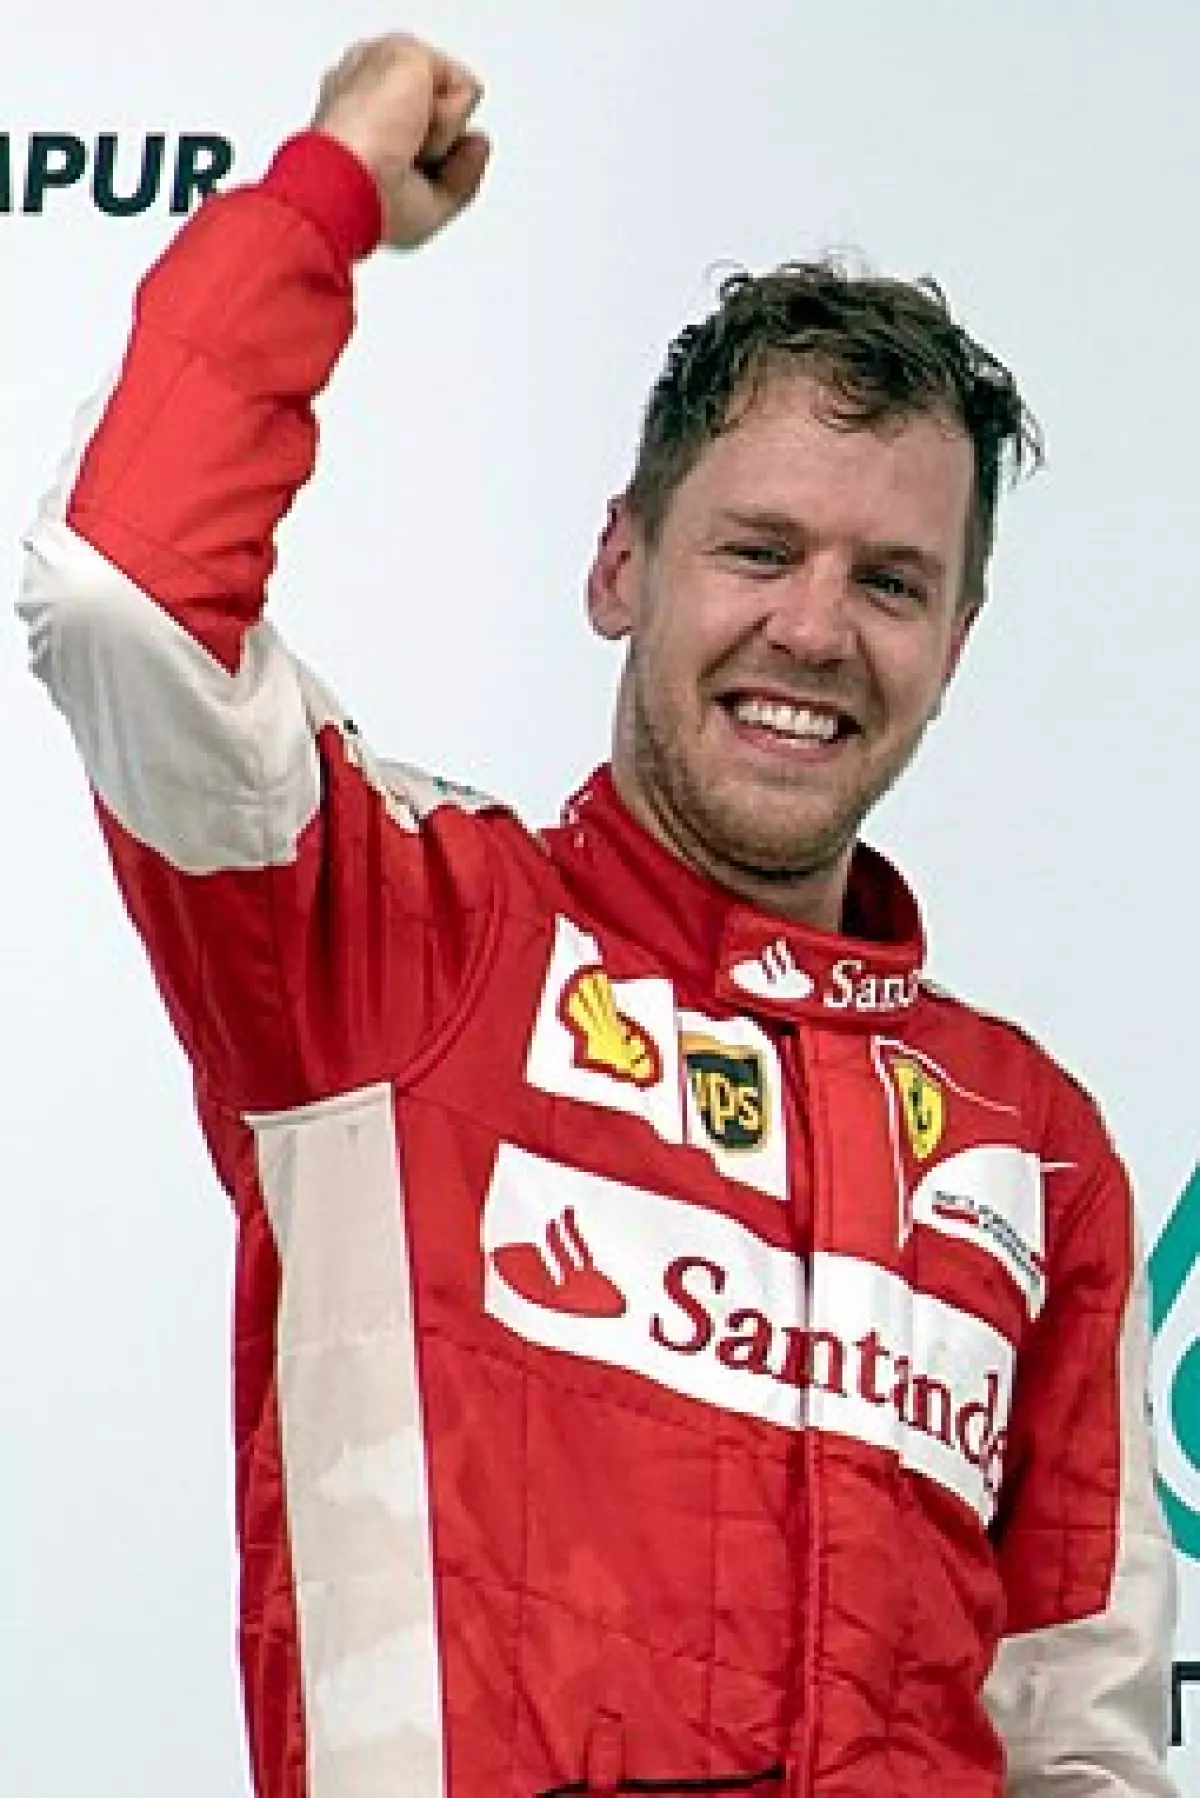 Sebastian Vettel celebrating his victory at the 2015 Malaysian Grand Prix, his first for the Ferrari team.